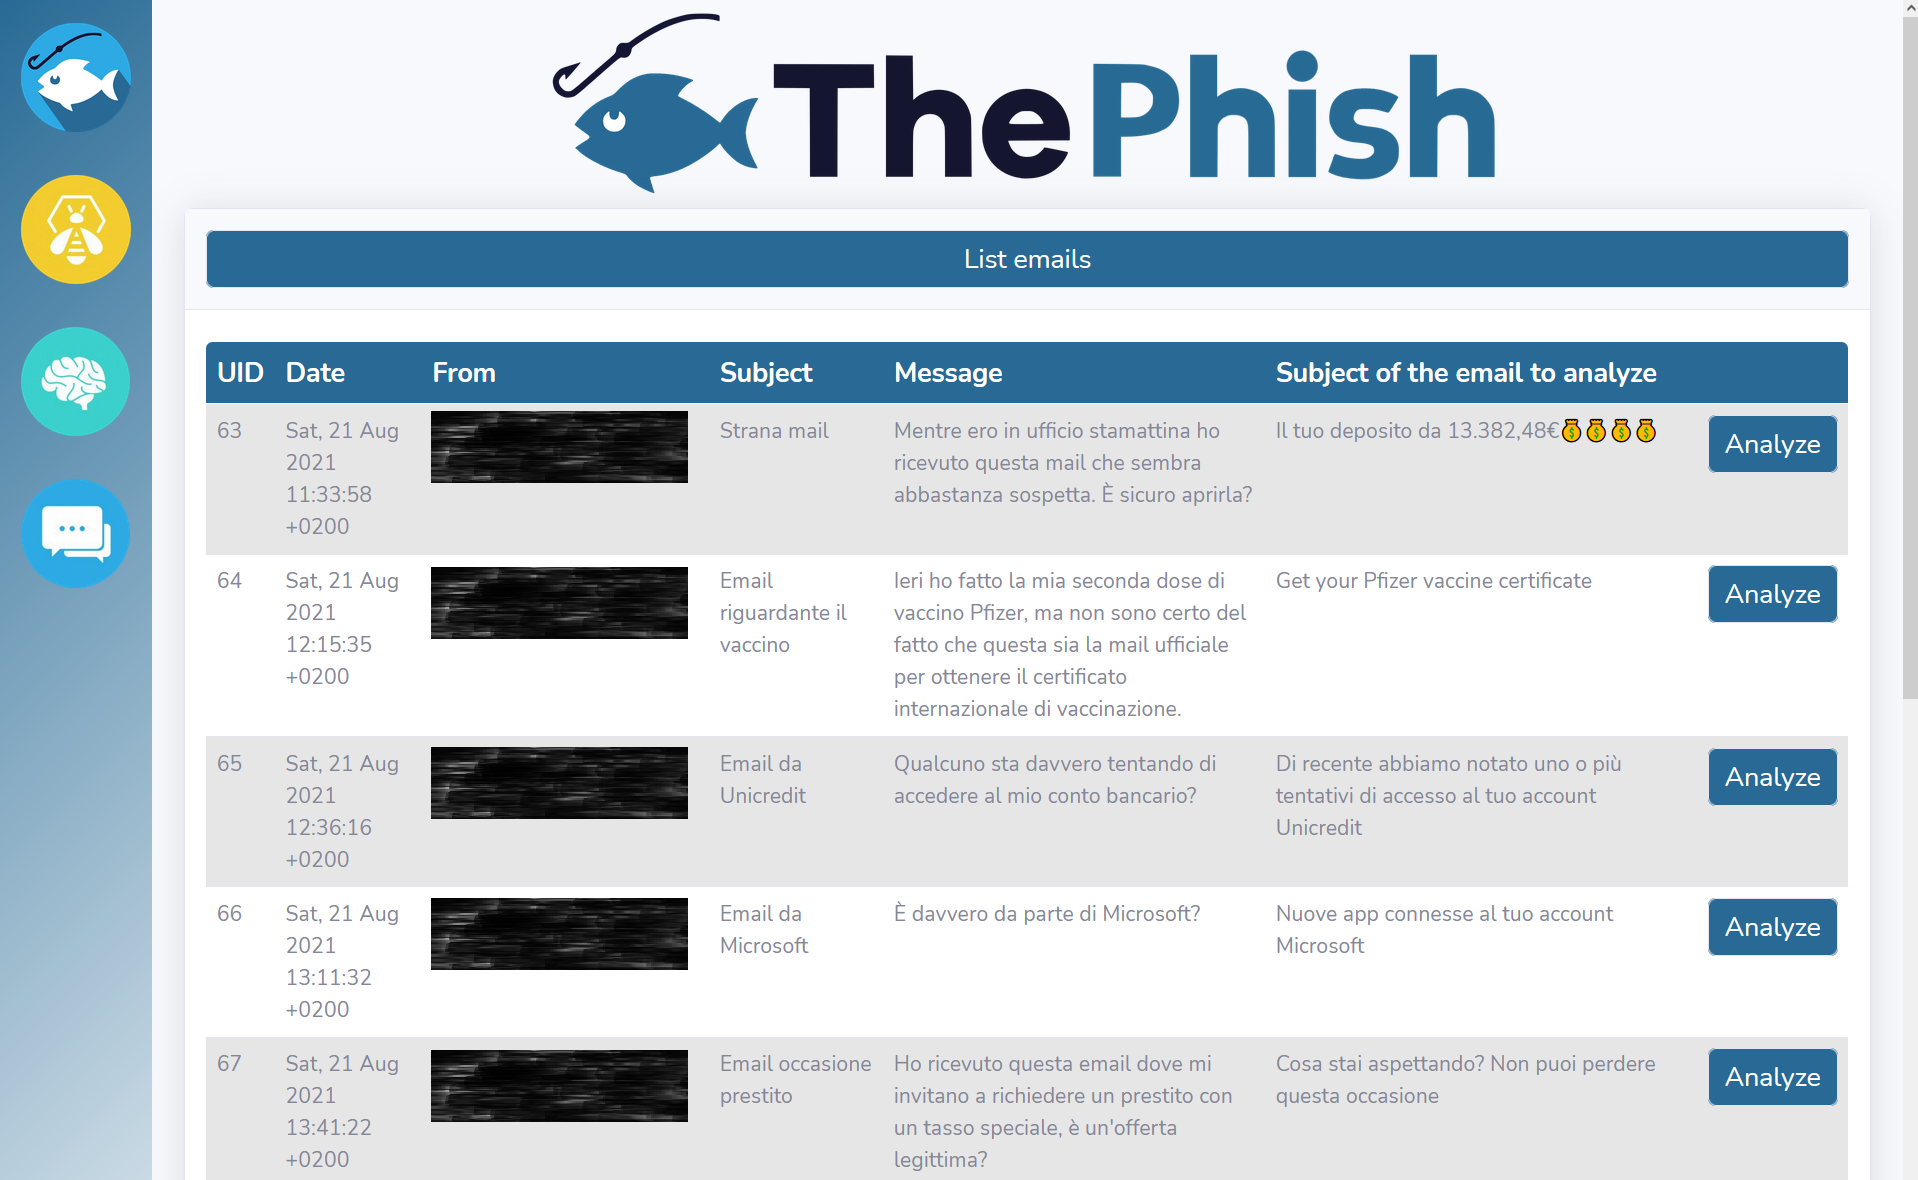 ThePhish list emails